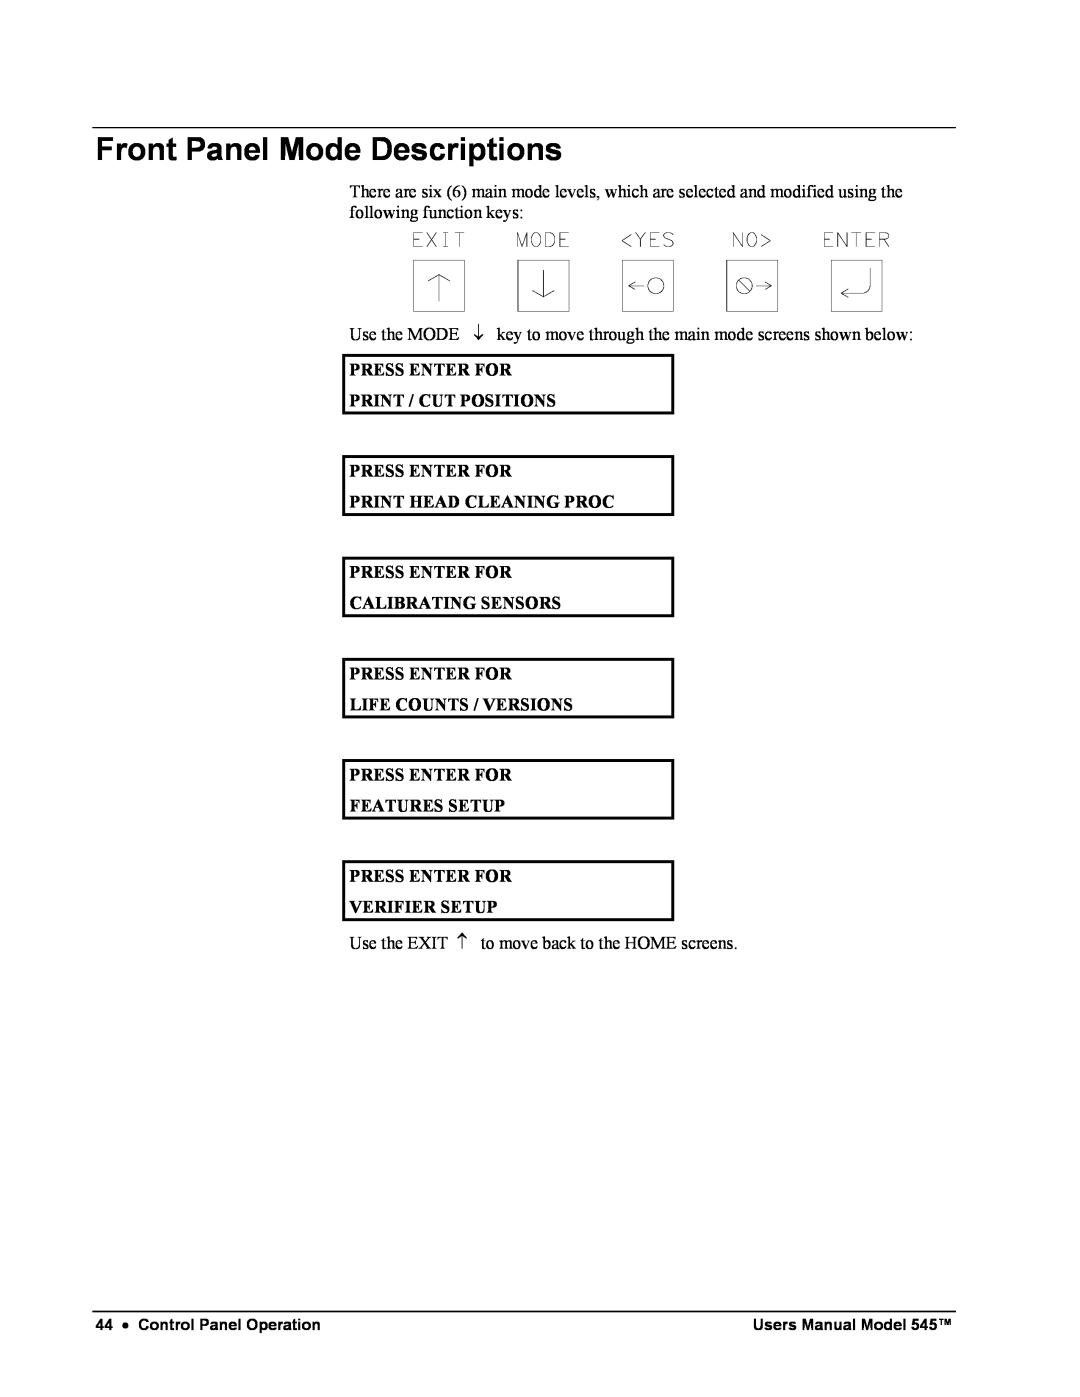 Paxar 545 user manual Front Panel Mode Descriptions 